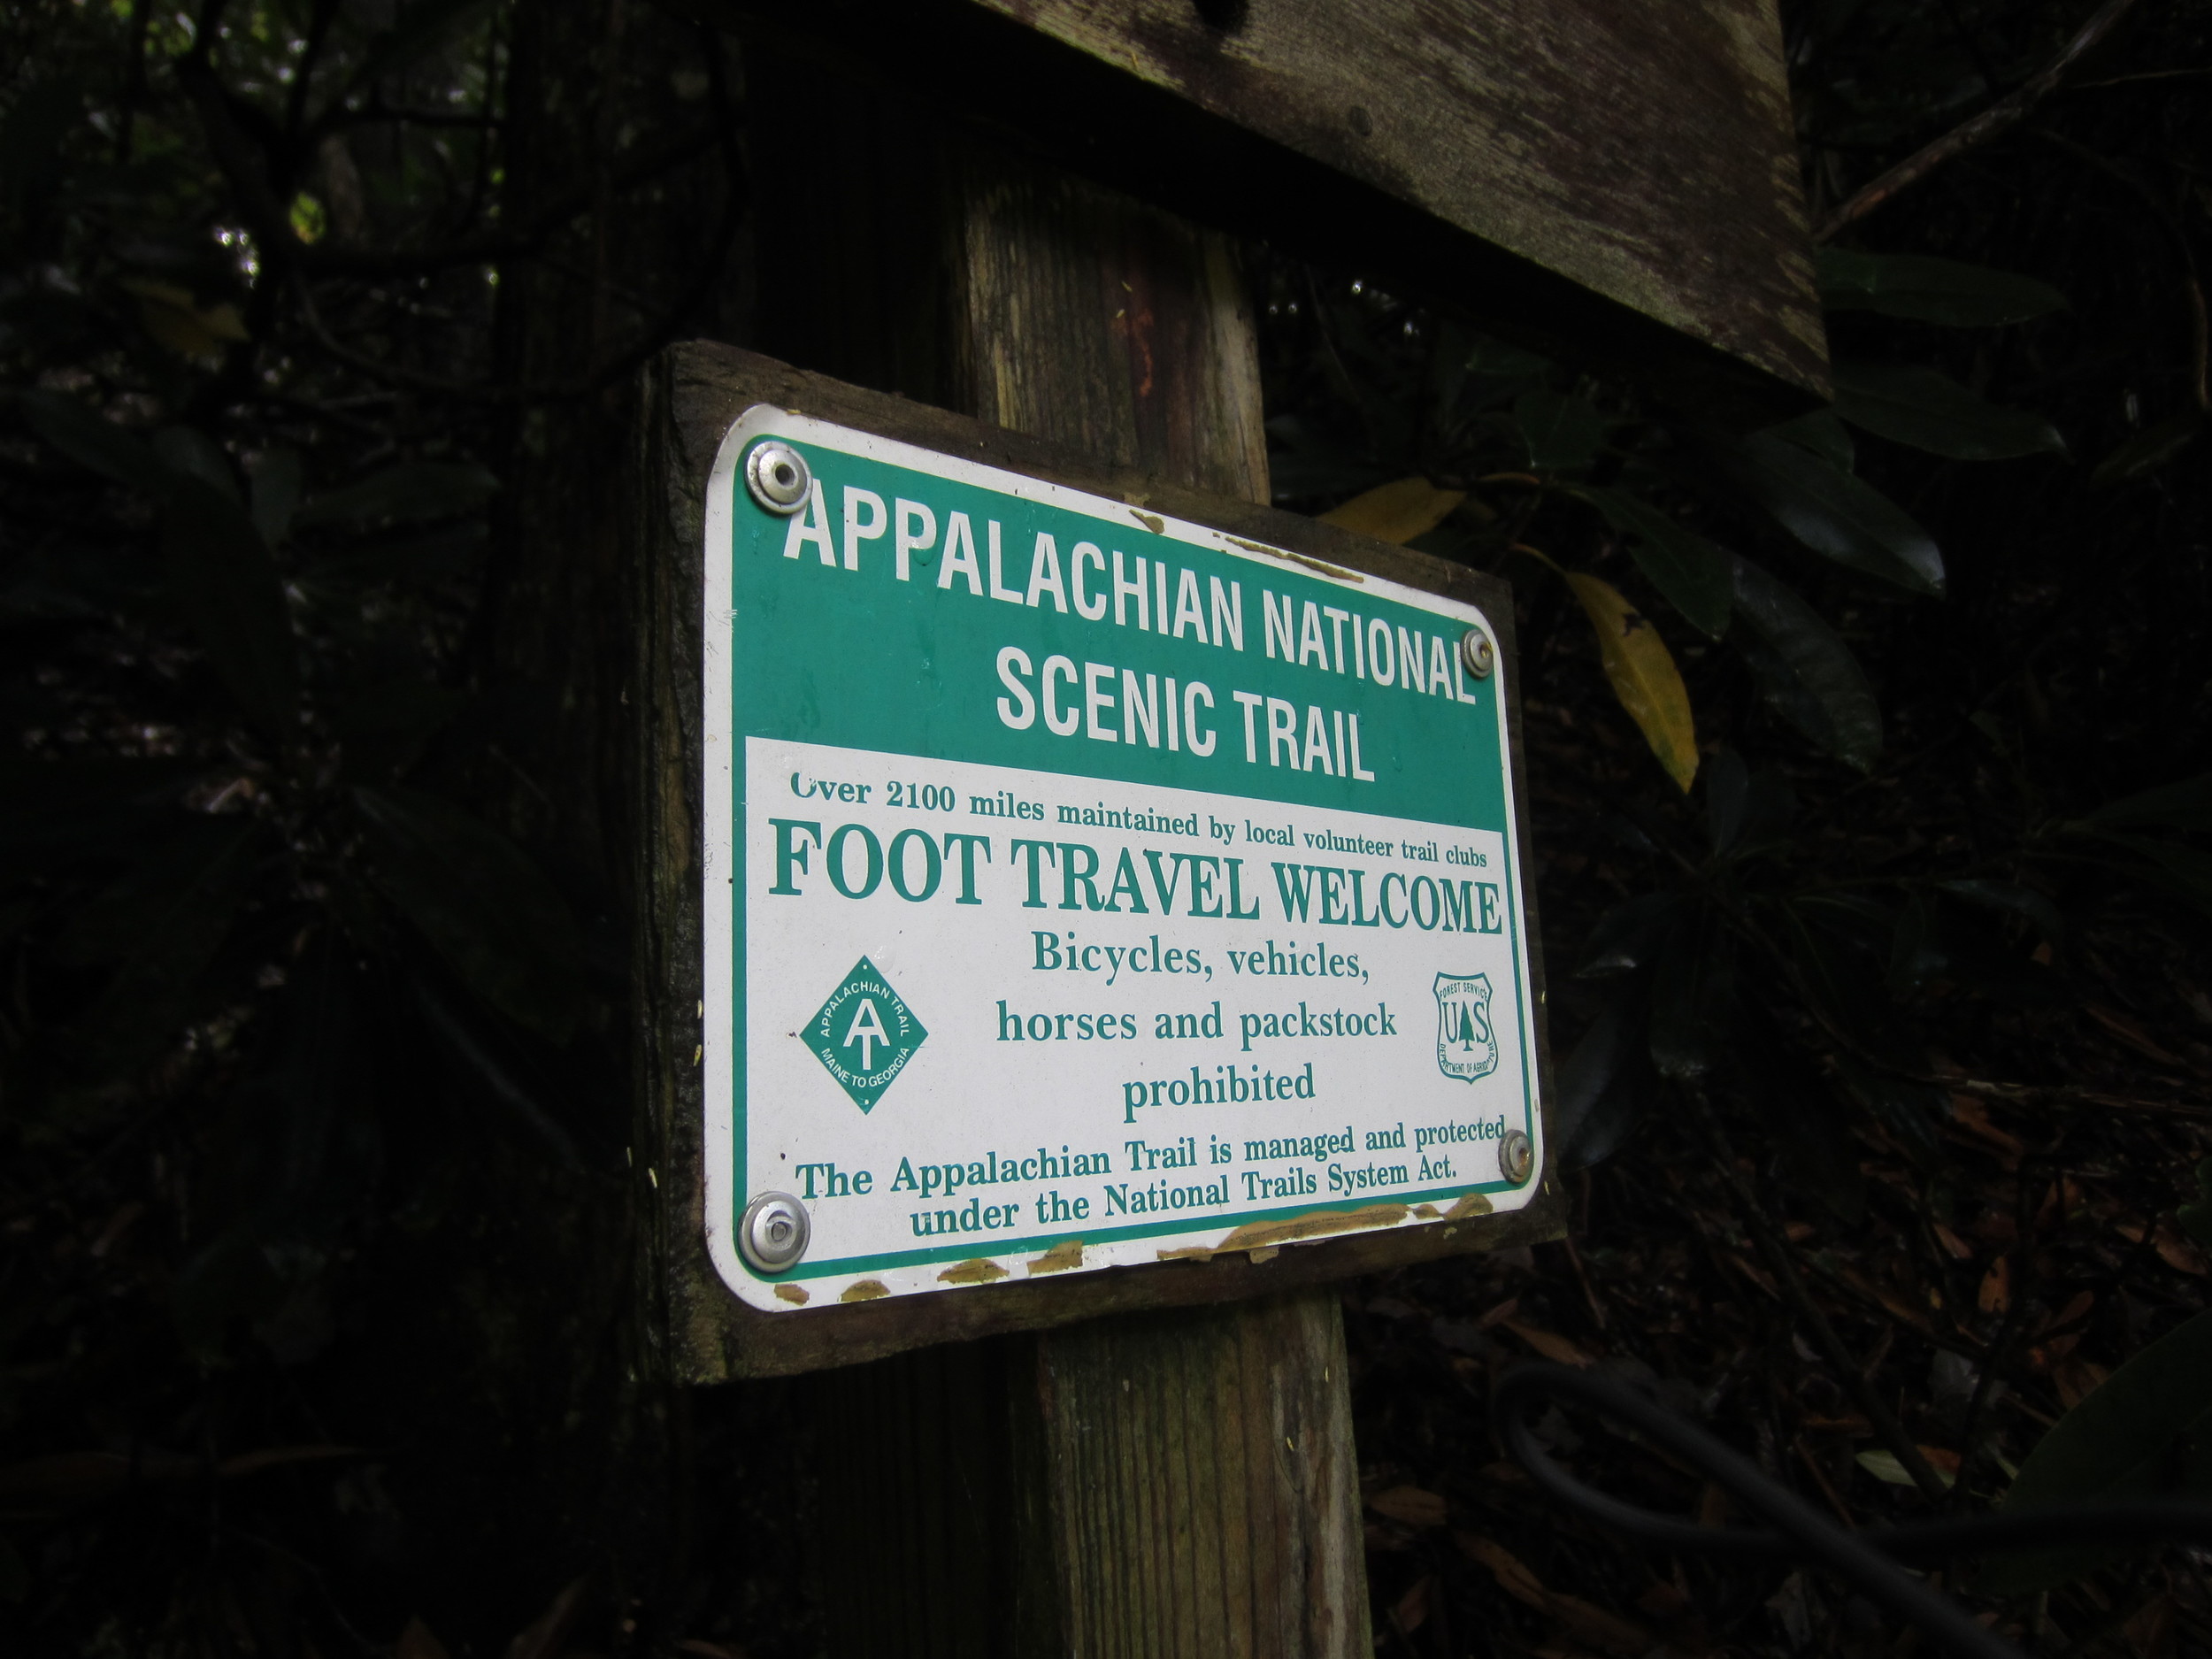 Appalachian Trail - Hot Springs, NC to Davenport Gap, NC